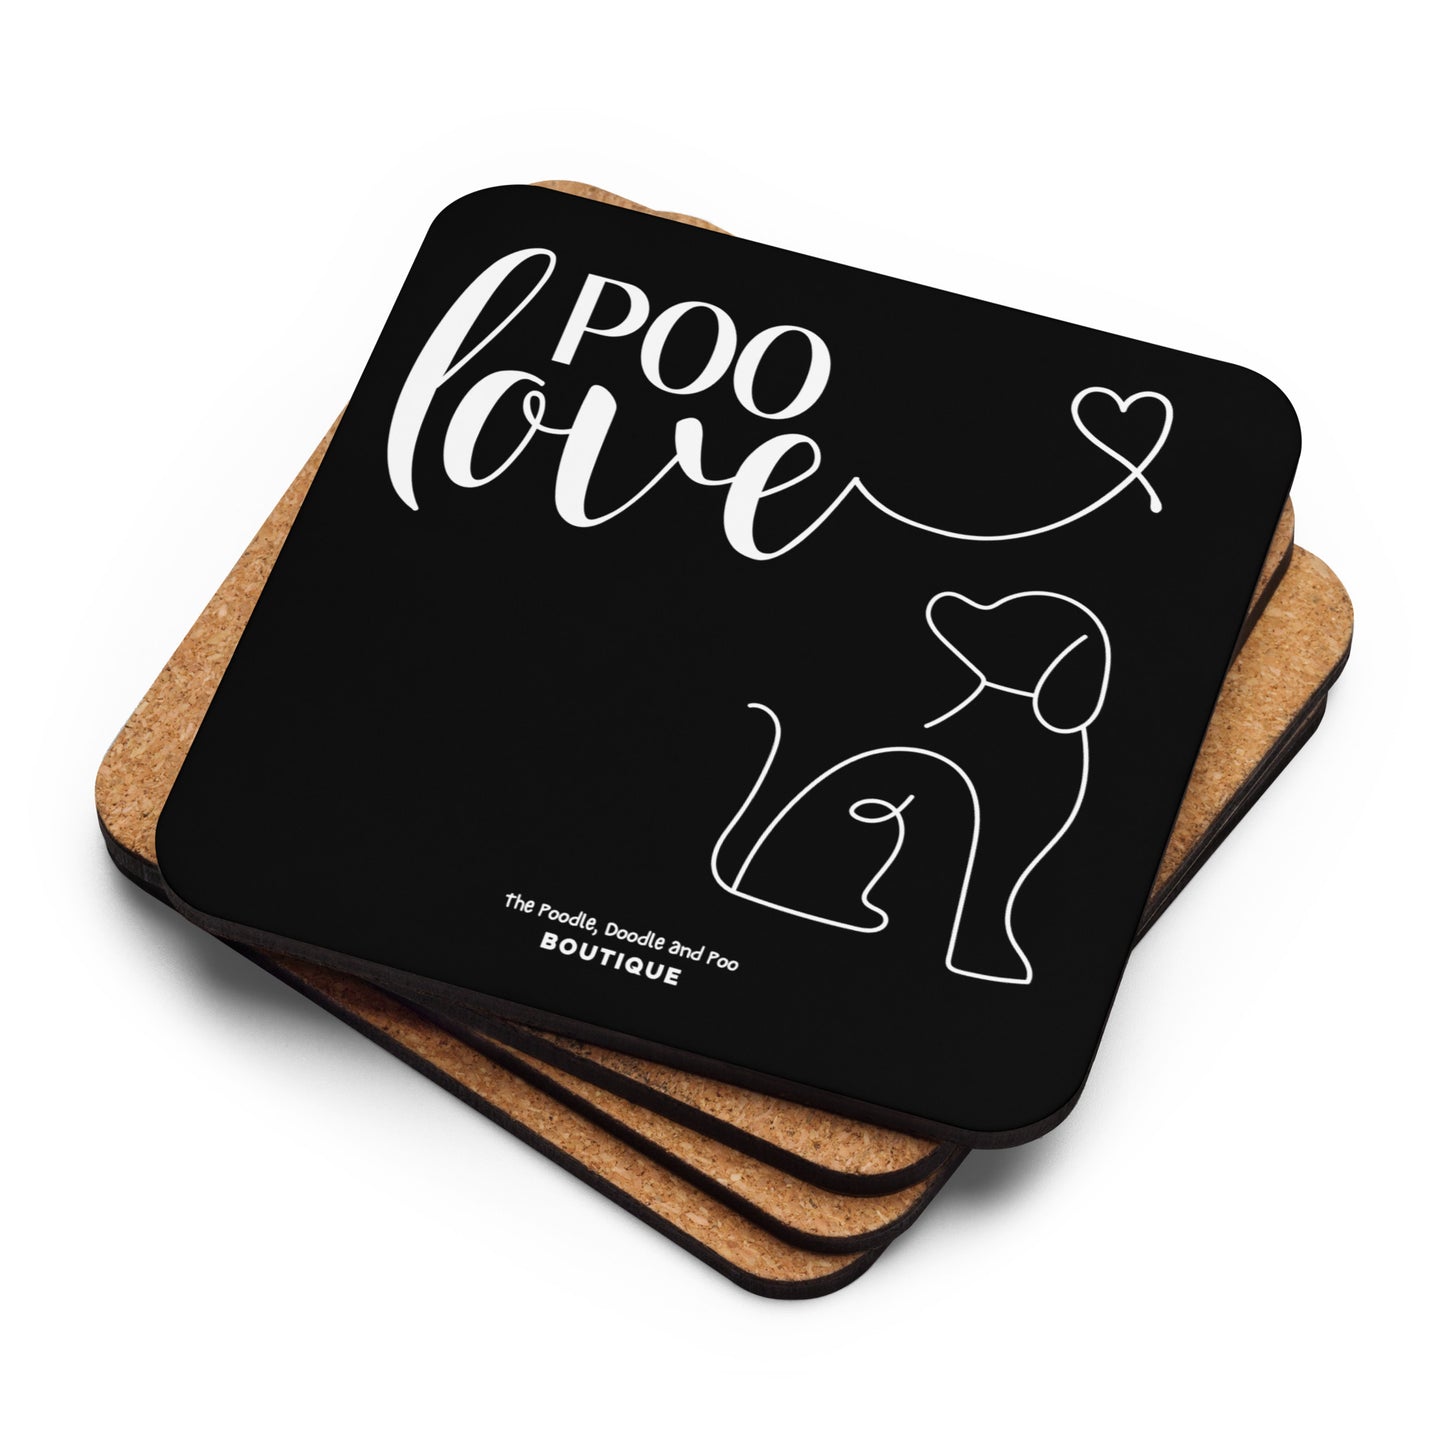 "Poo Love" Cork-back coaster